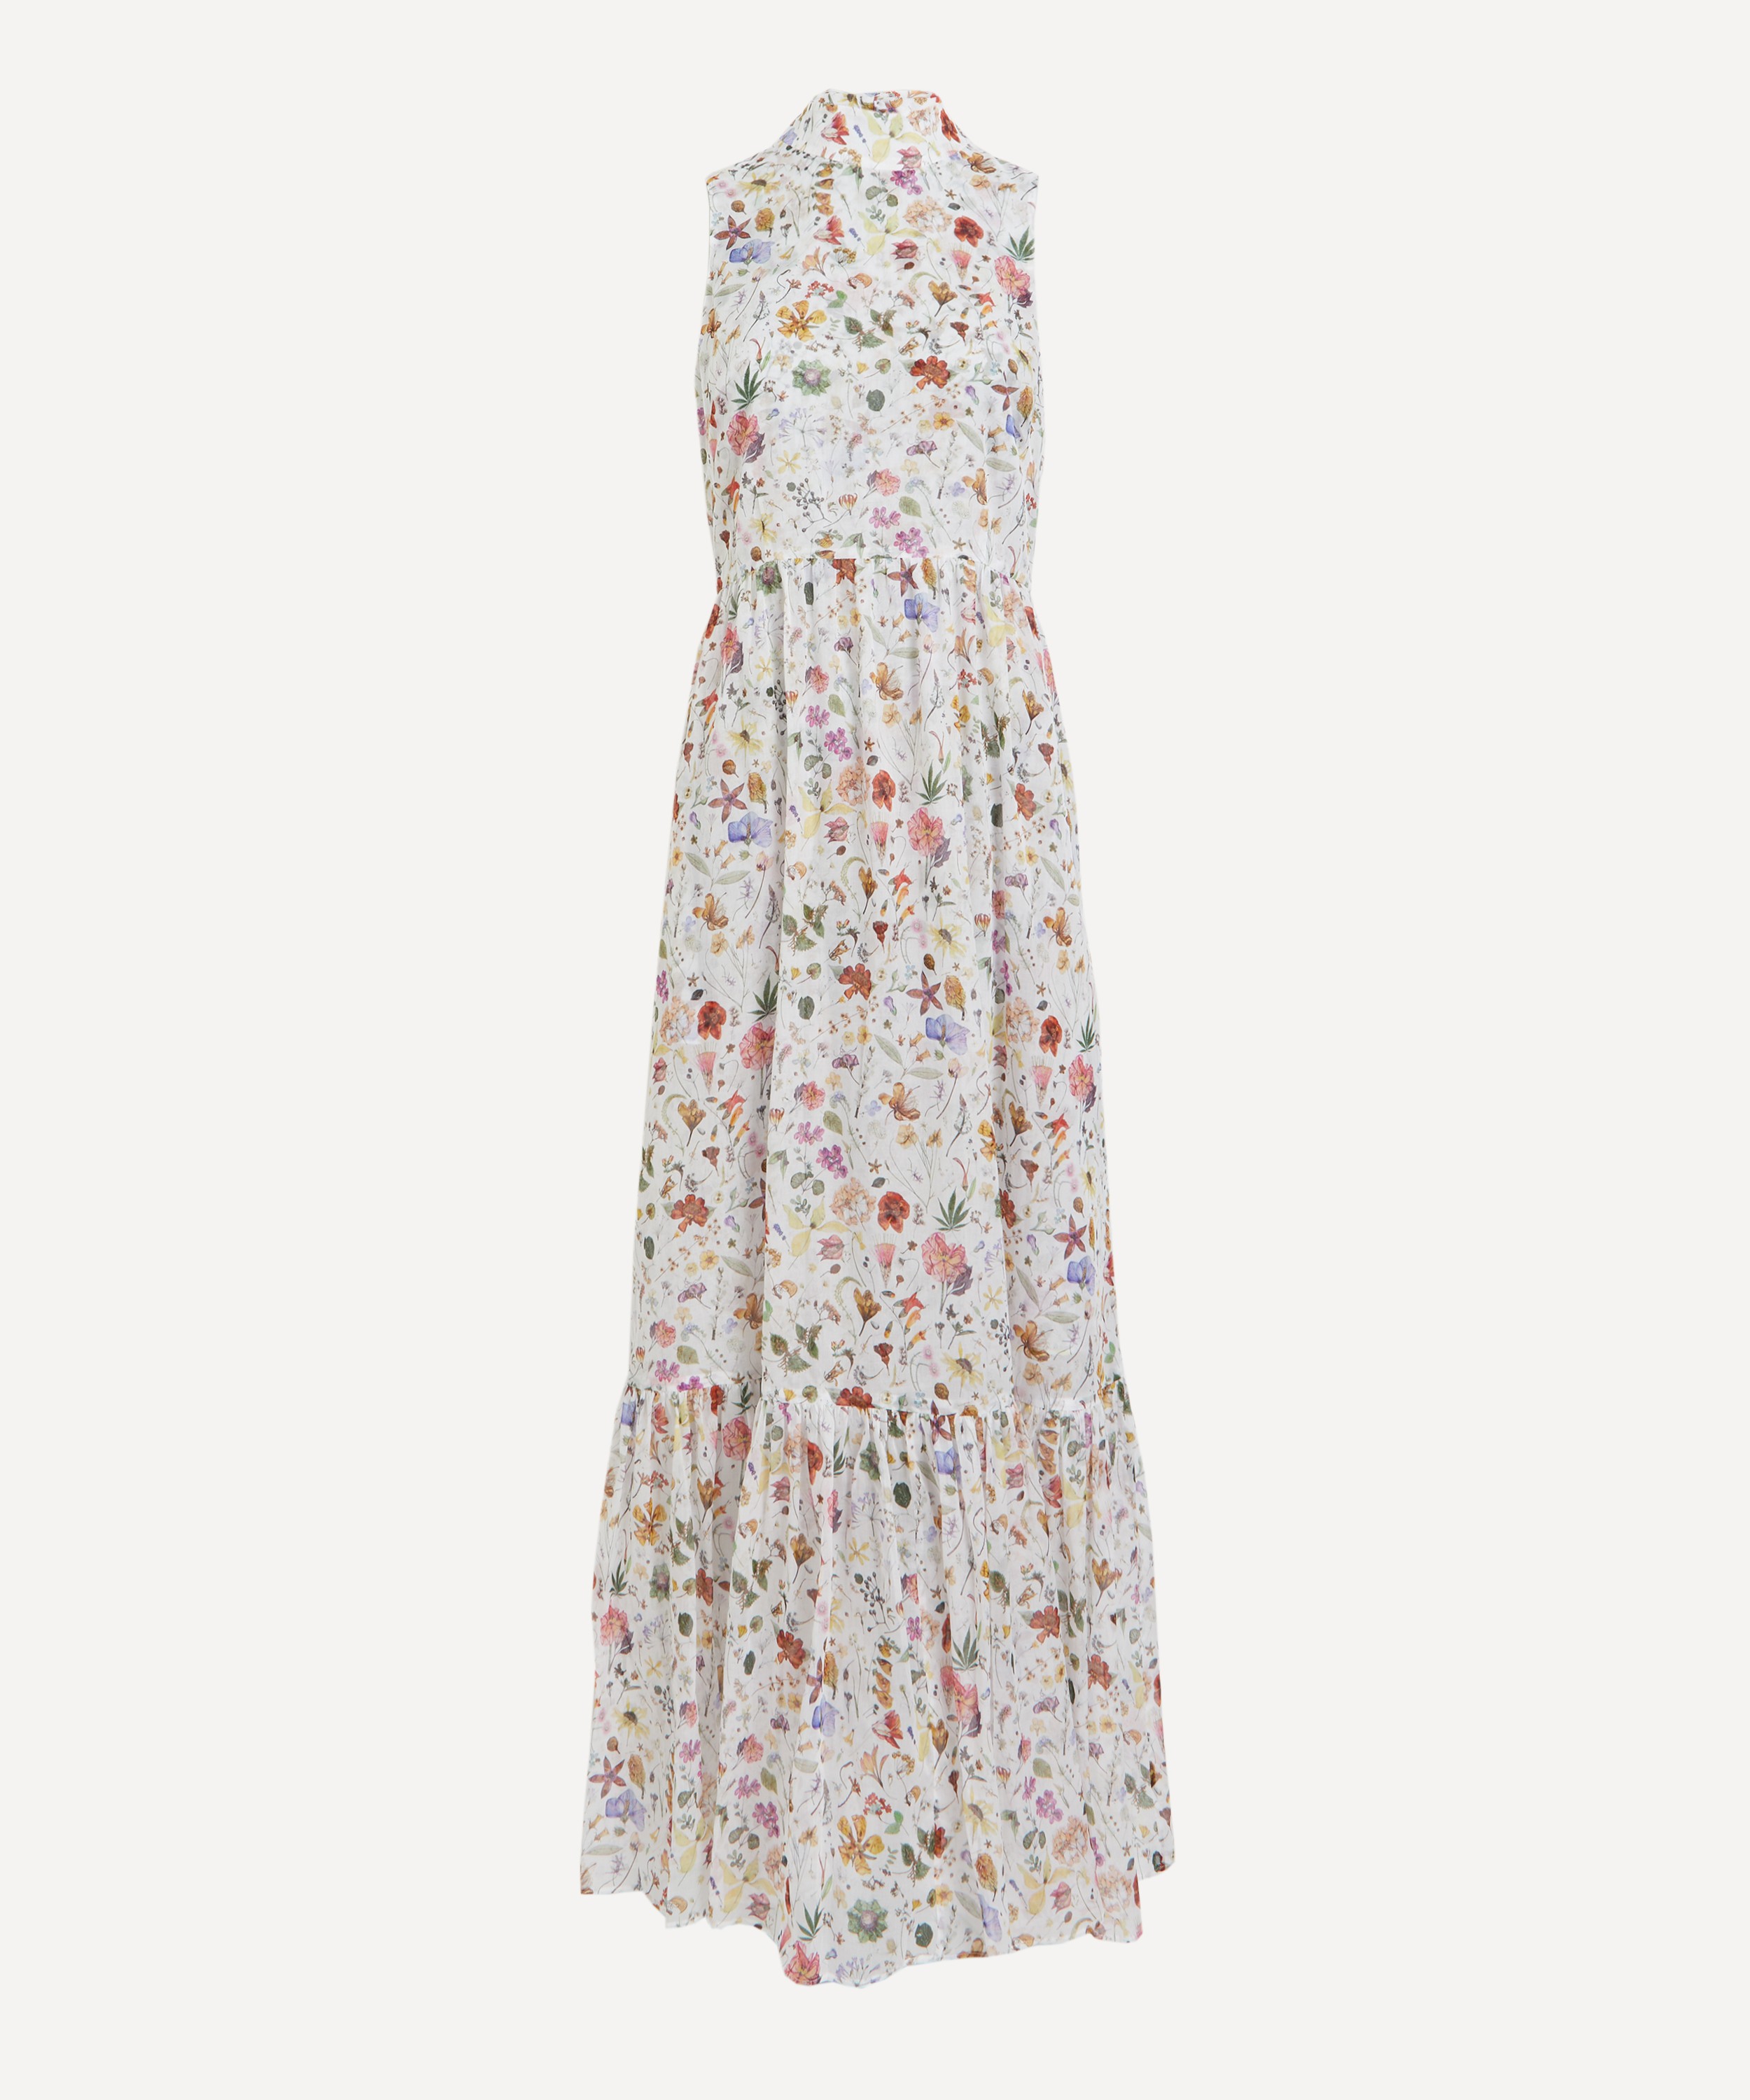 Liberty - Floral Eve Sheer Cotton Chiffon Veranda Dress 